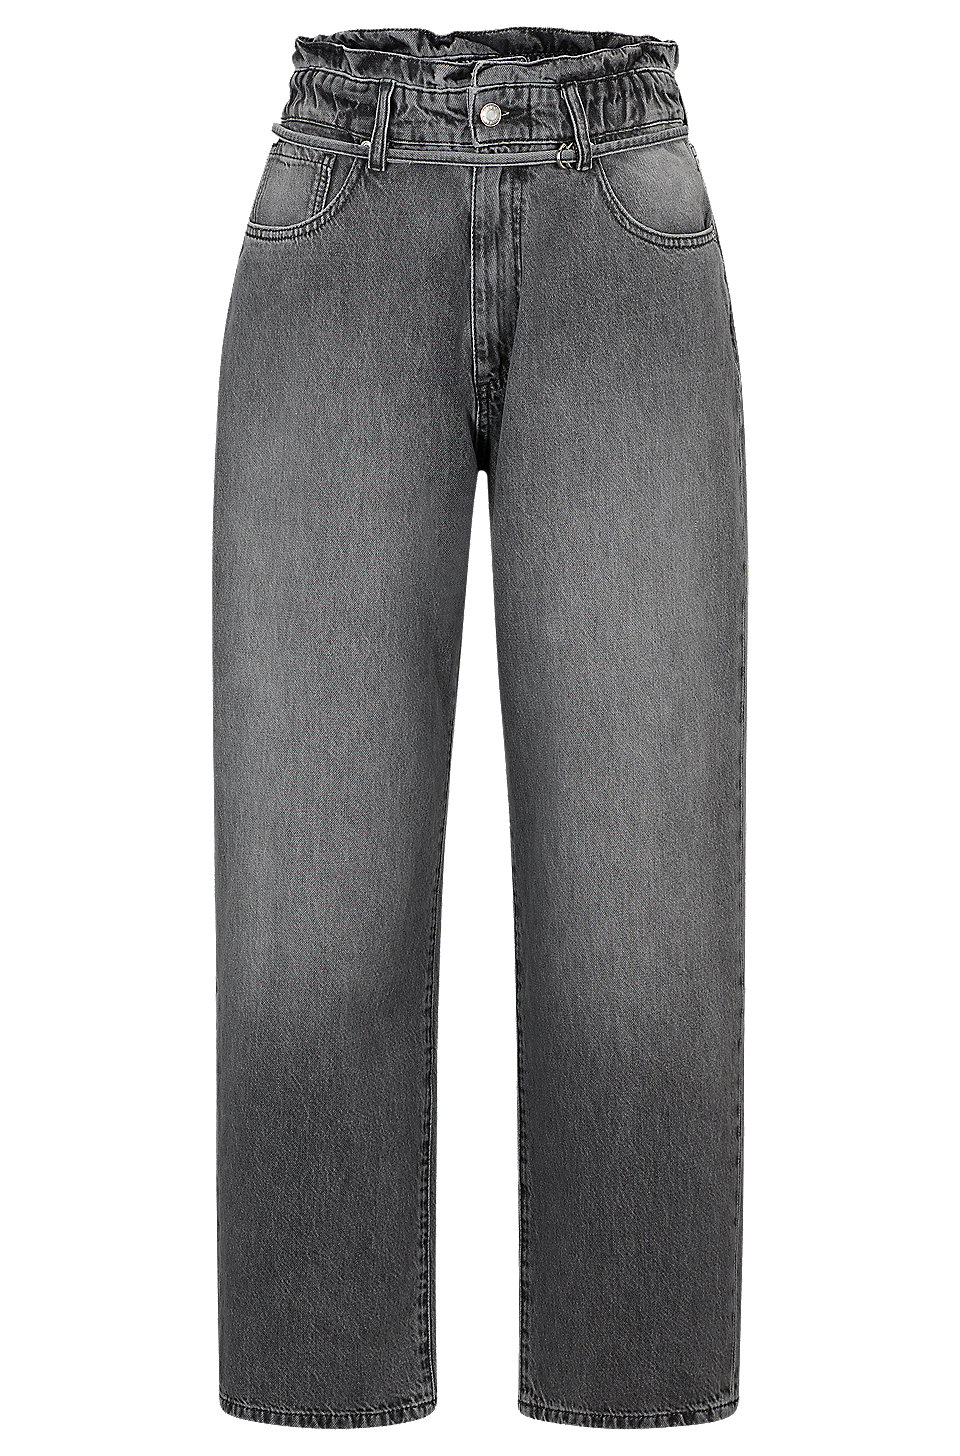 HUGO - Relaxed-fit paperbag jeans in black rigid denim